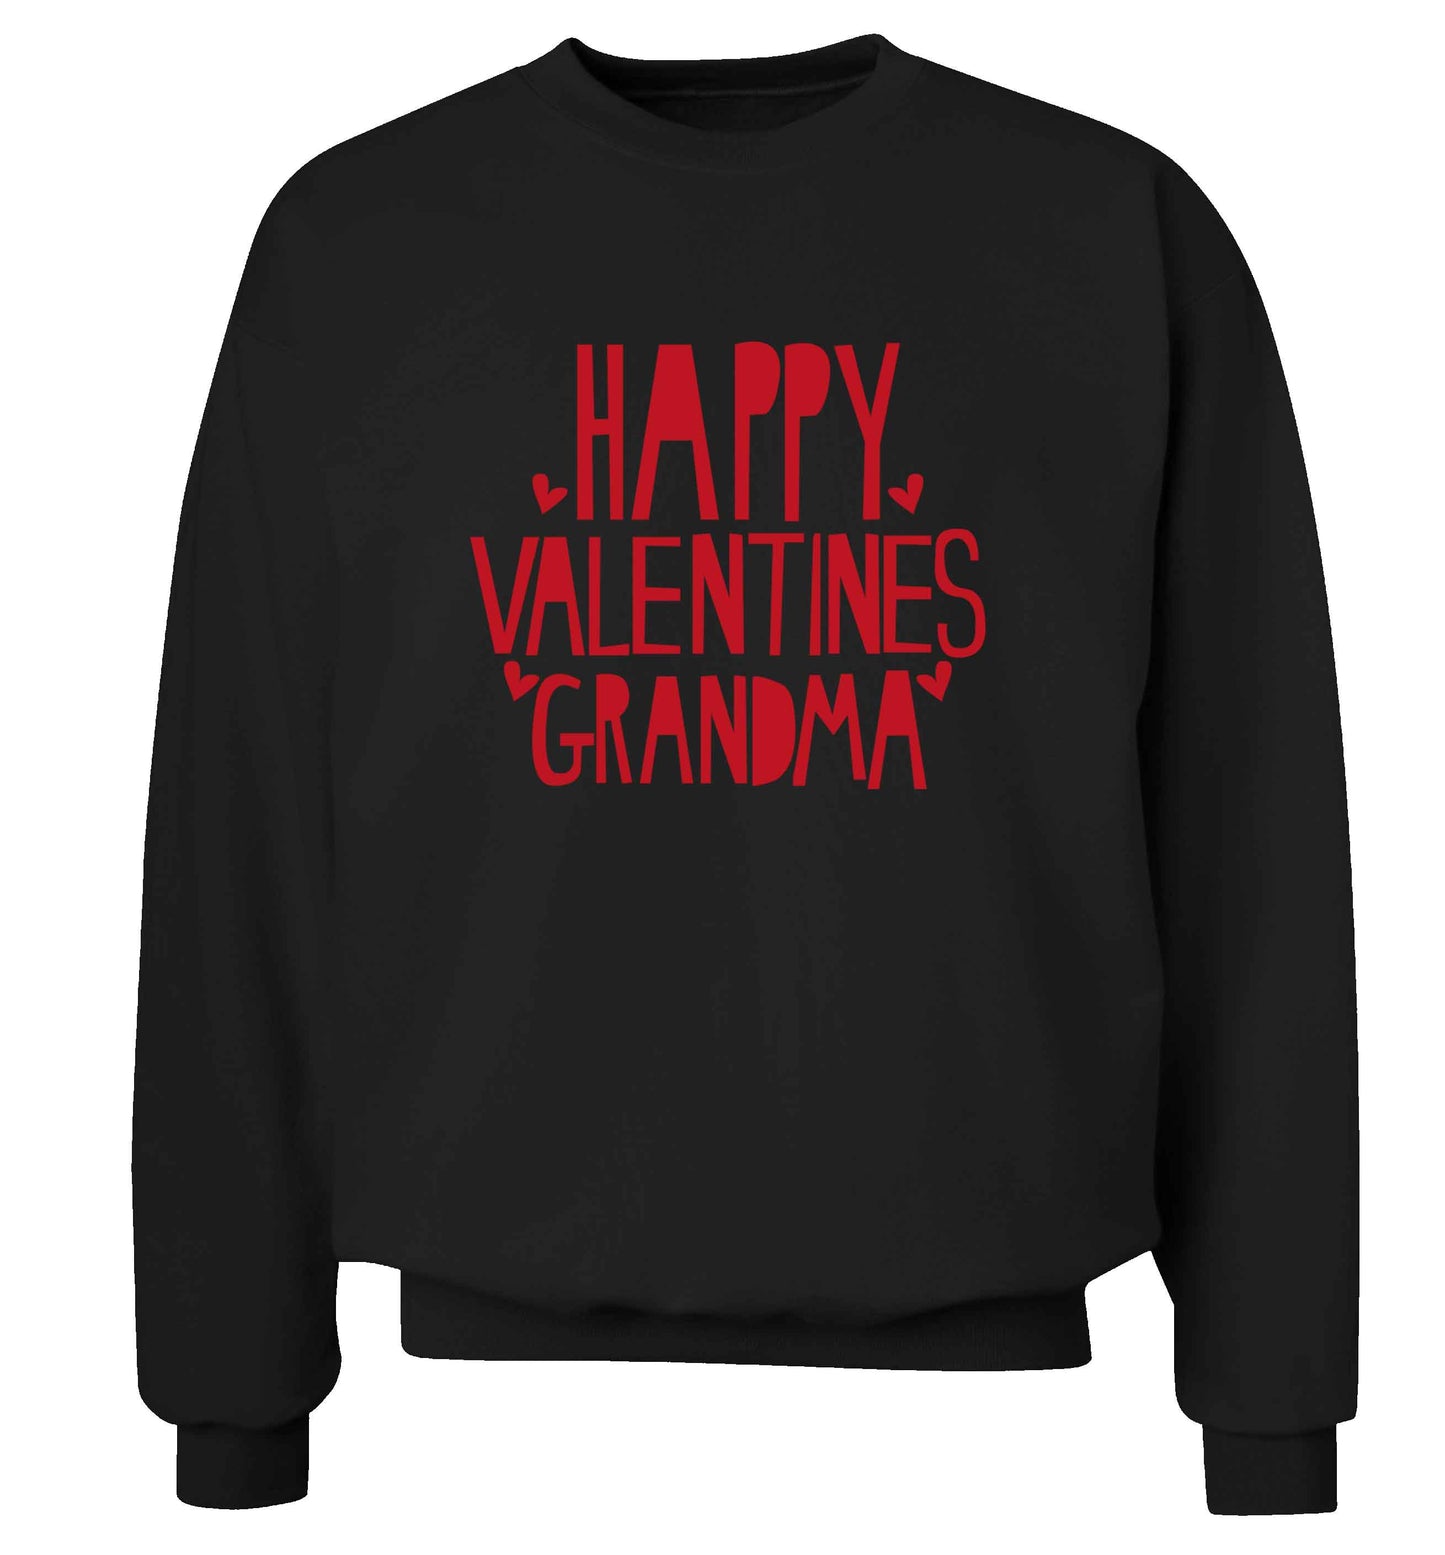 Happy valentines grandma adult's unisex black sweater 2XL